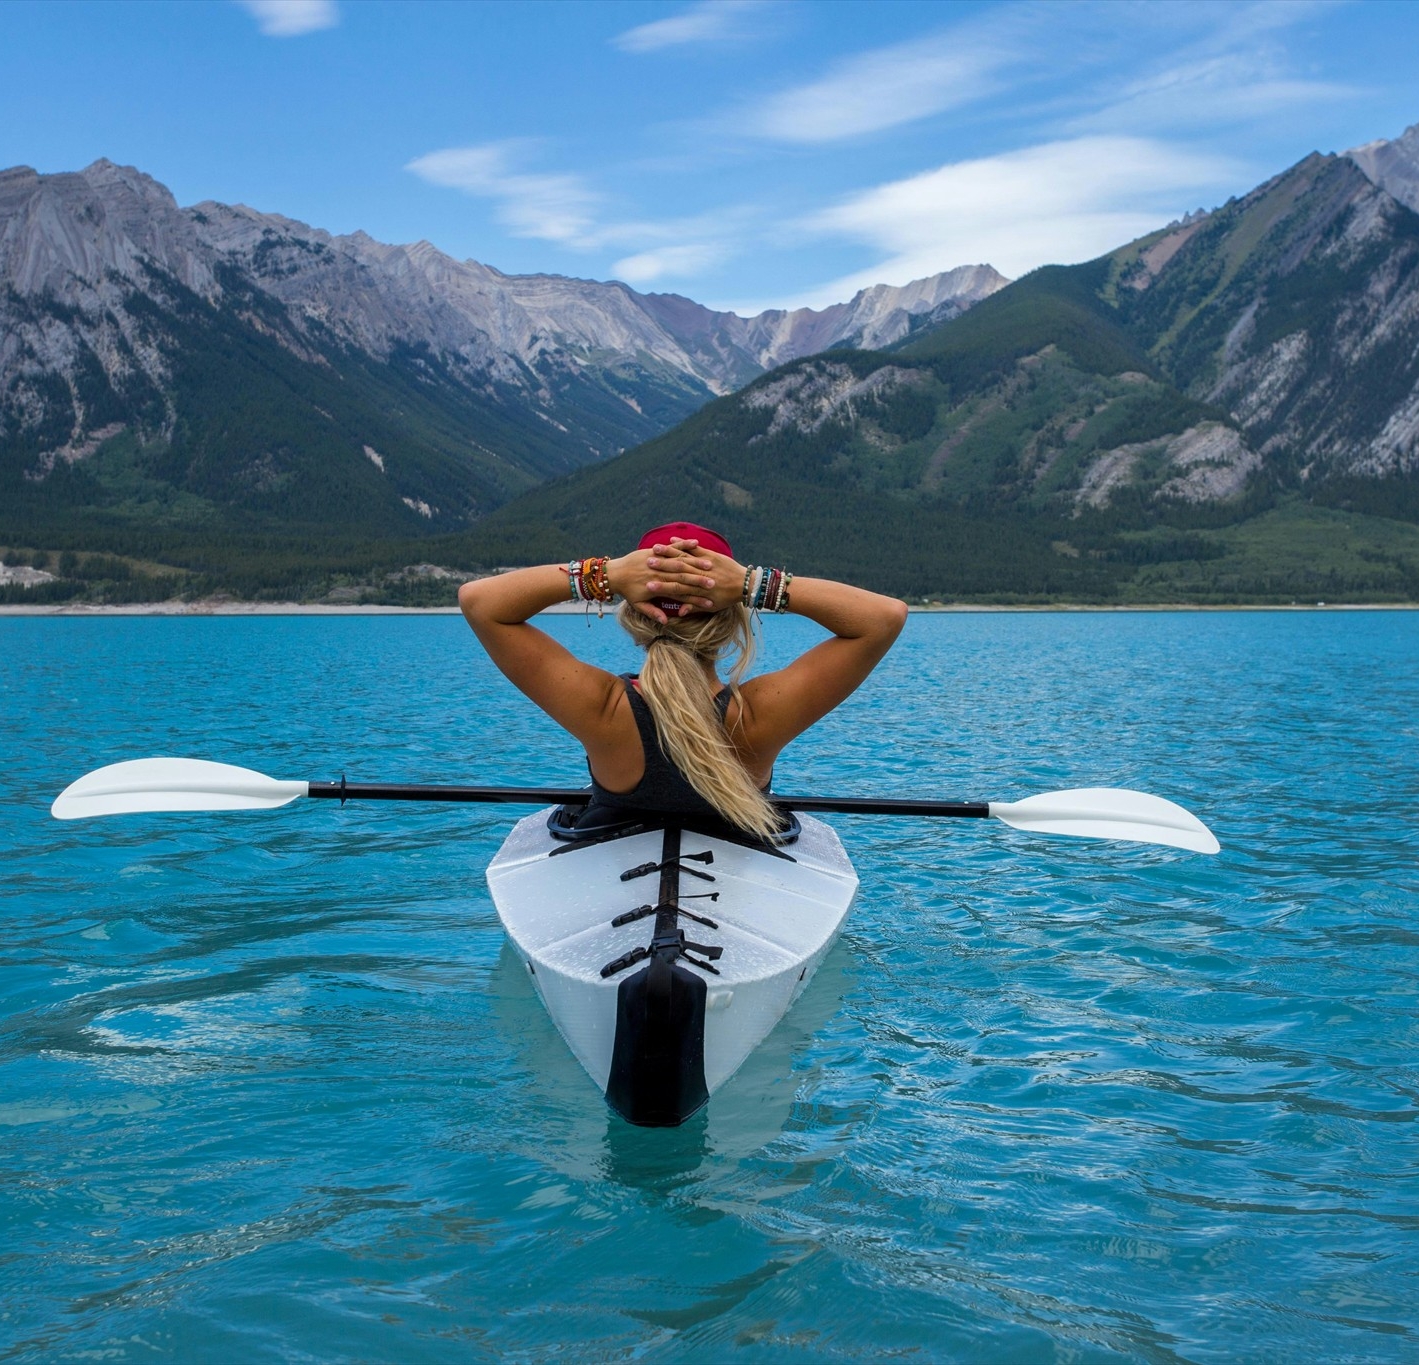 A woman kayaking in a lake.